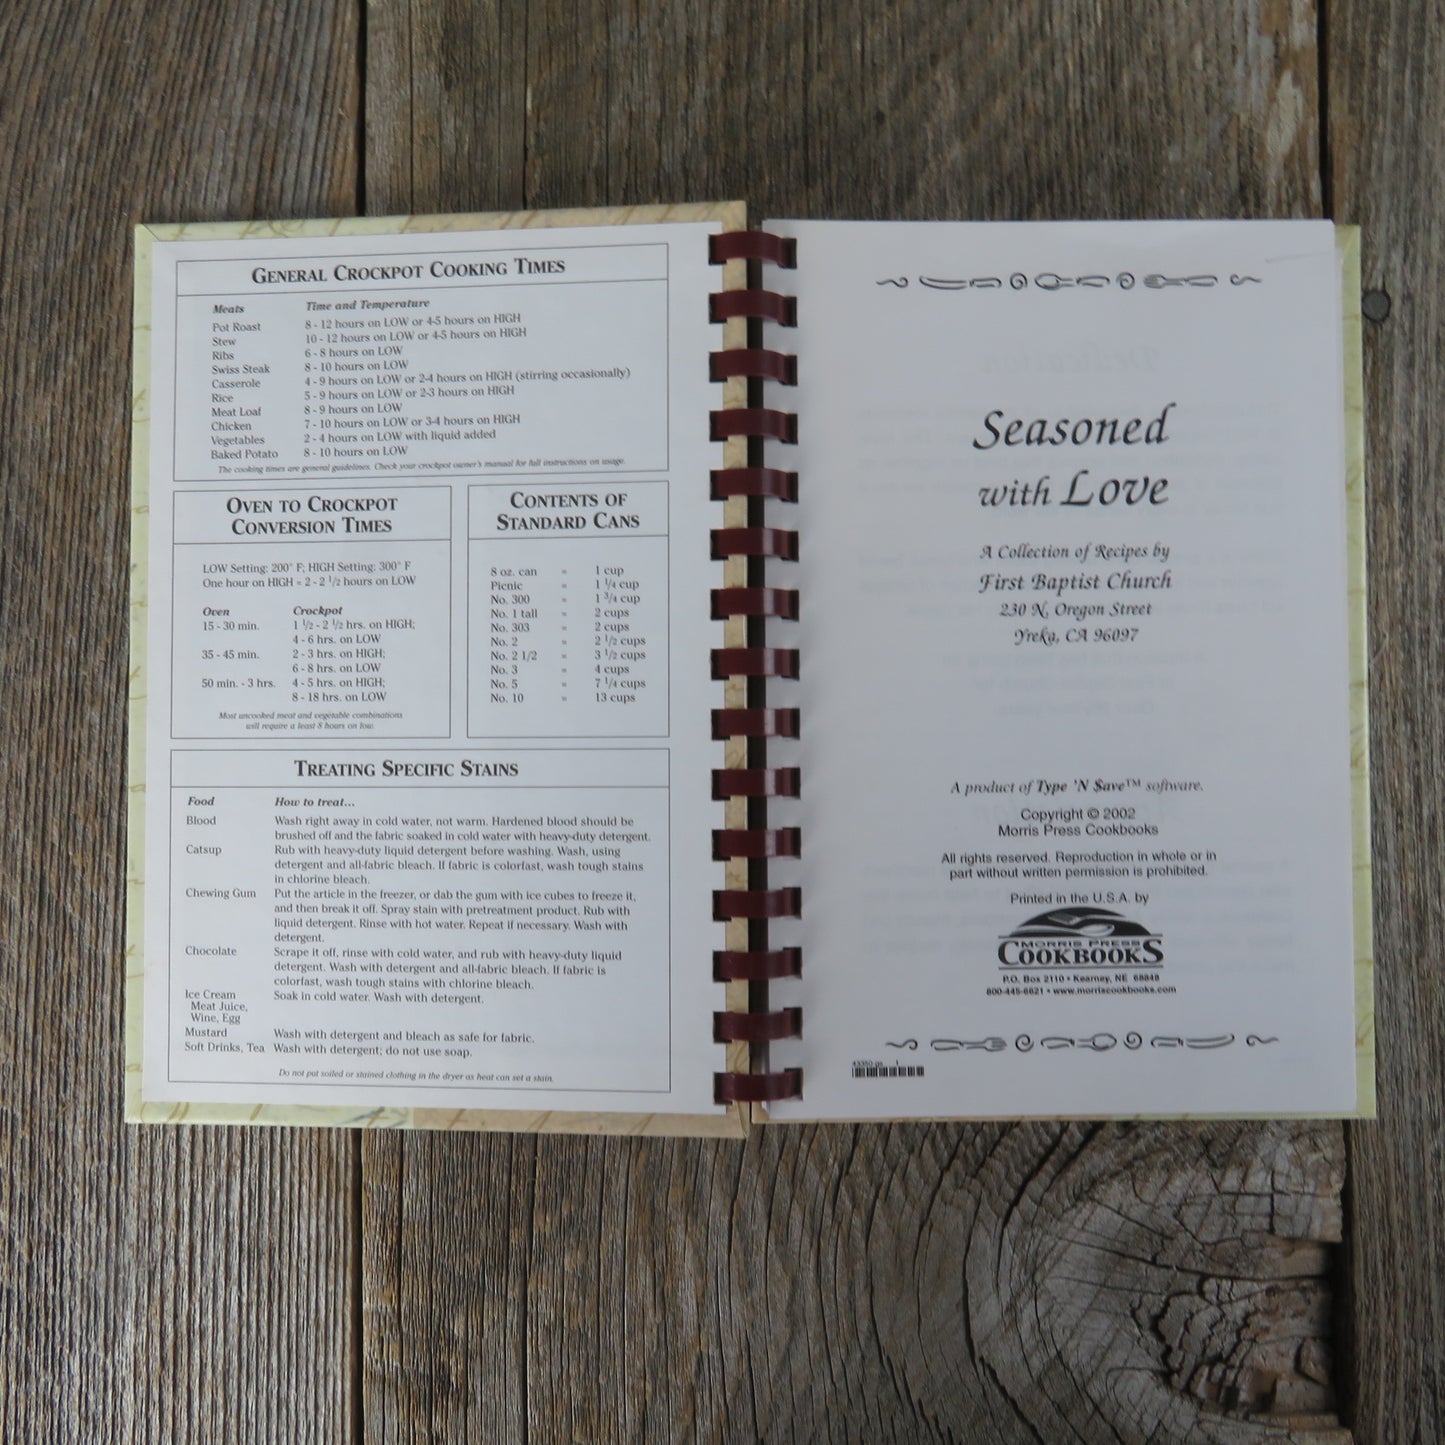 California Church Cookbook Yreka First Baptist Seasoned With Love 2002 - At Grandma's Table